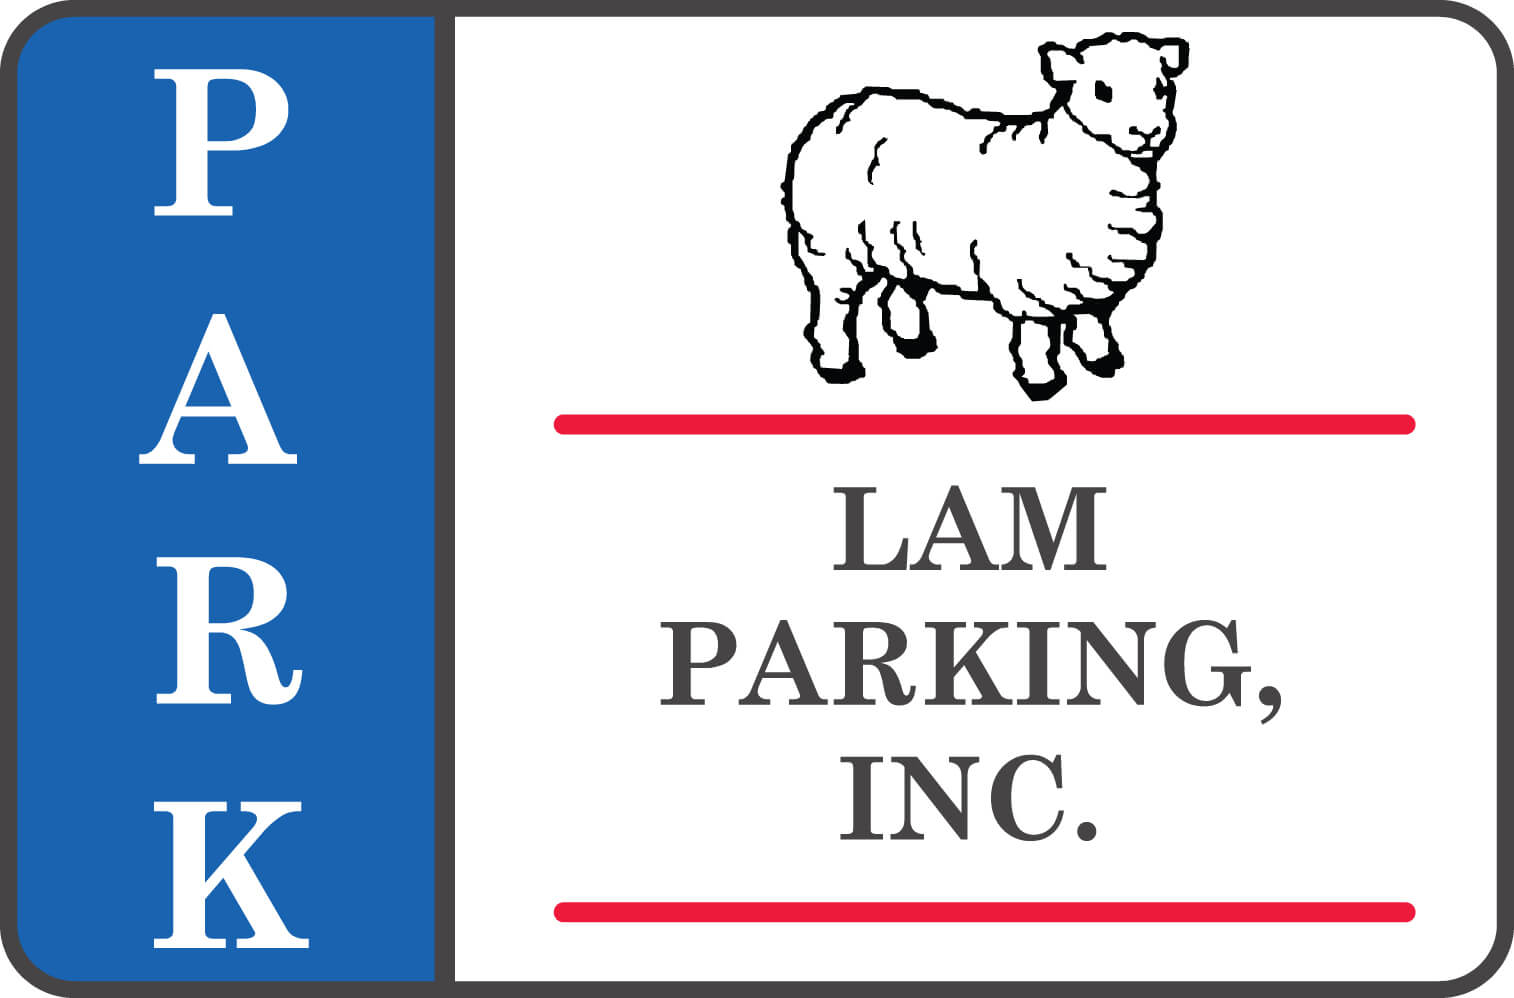 LAM Parking